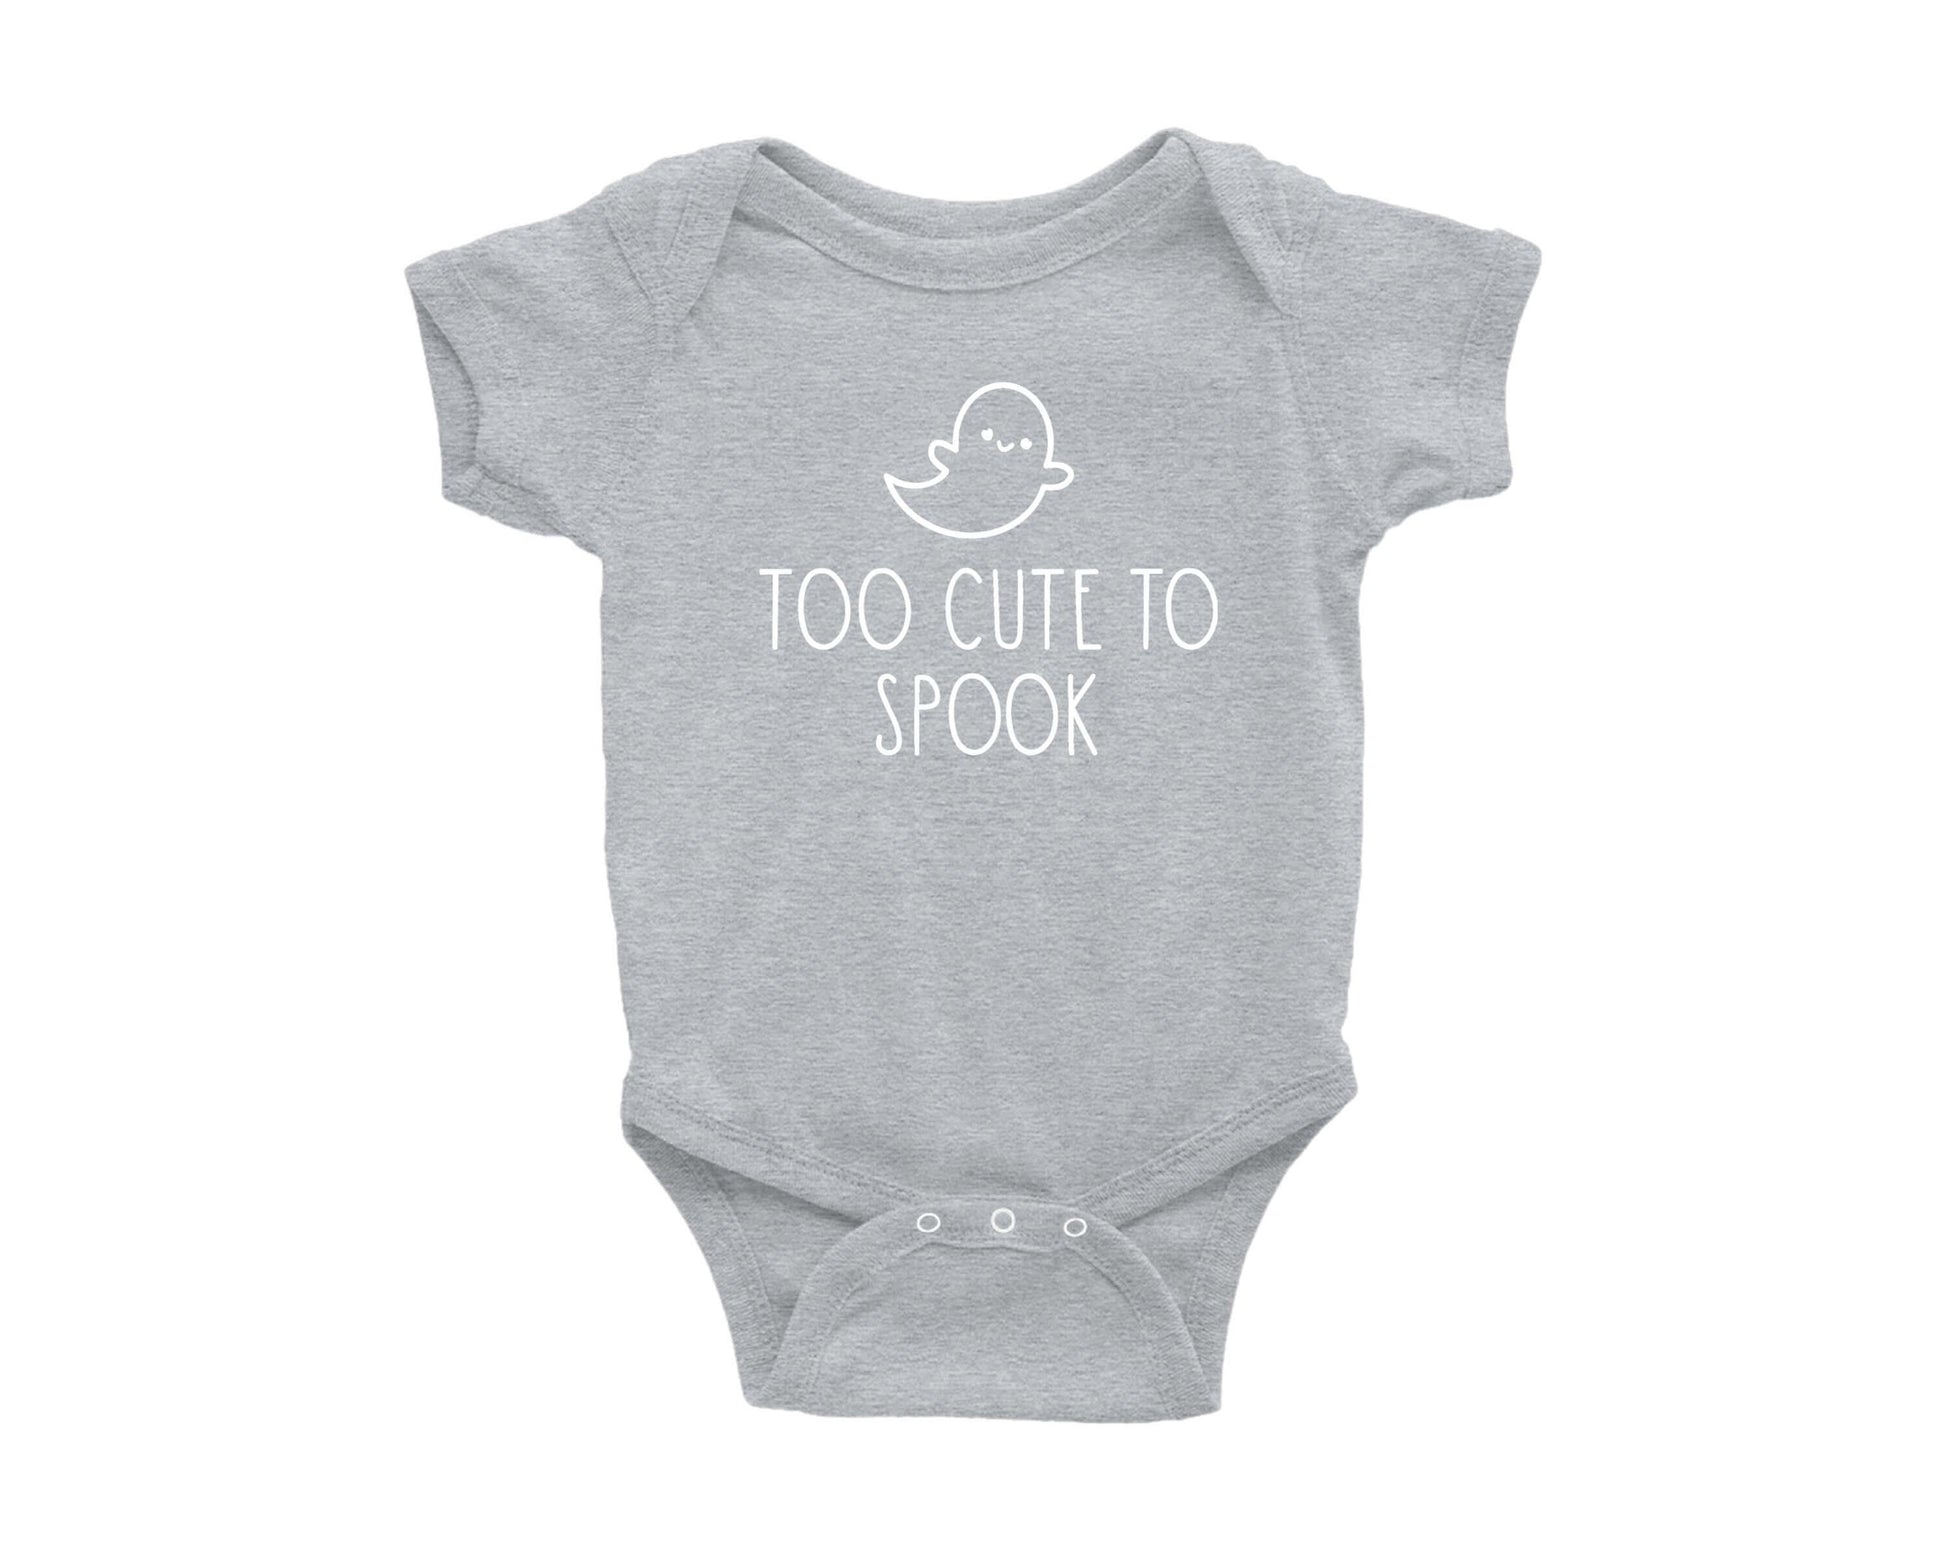 Too Cute To Spook Baby Onesie - Crystal Rose Design Co.